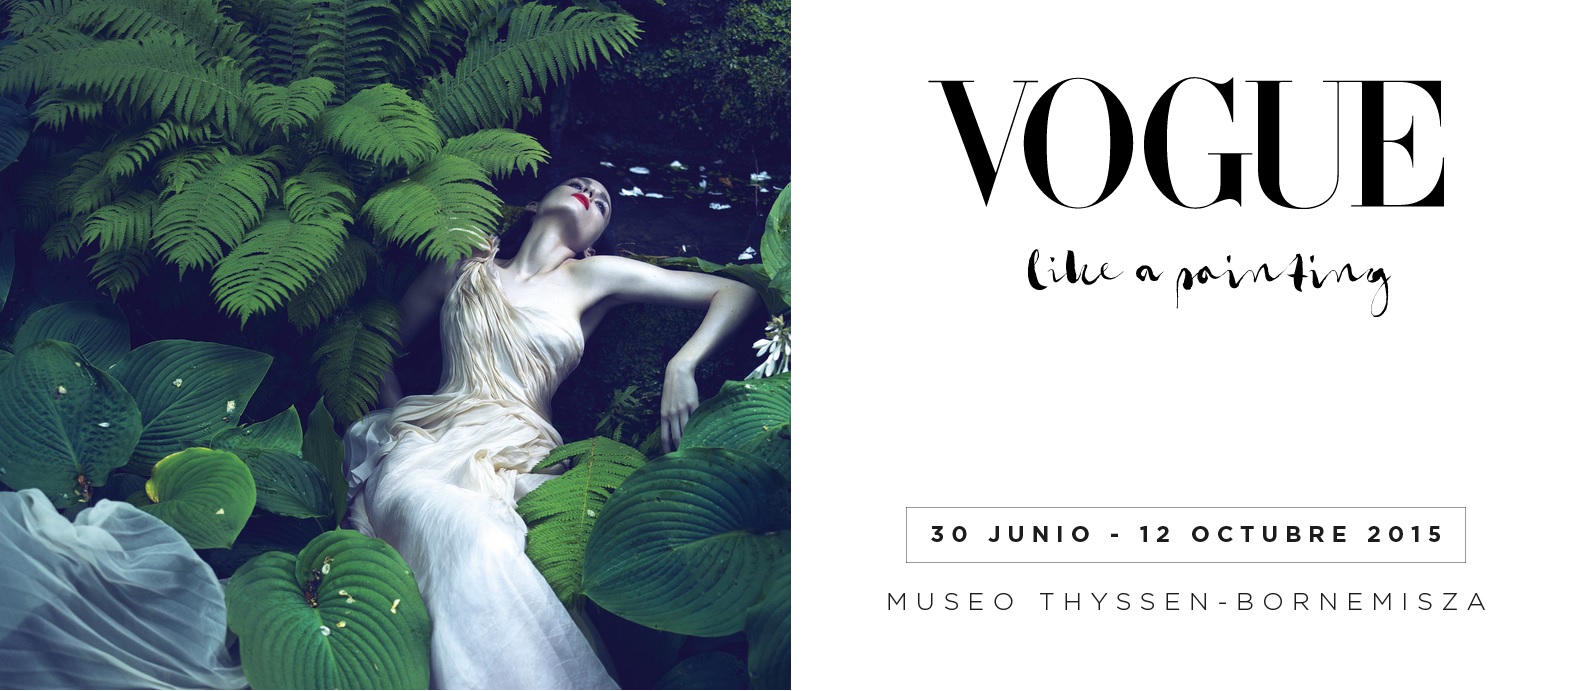 ‘Vogue like a painting’ se despide del Thyssen